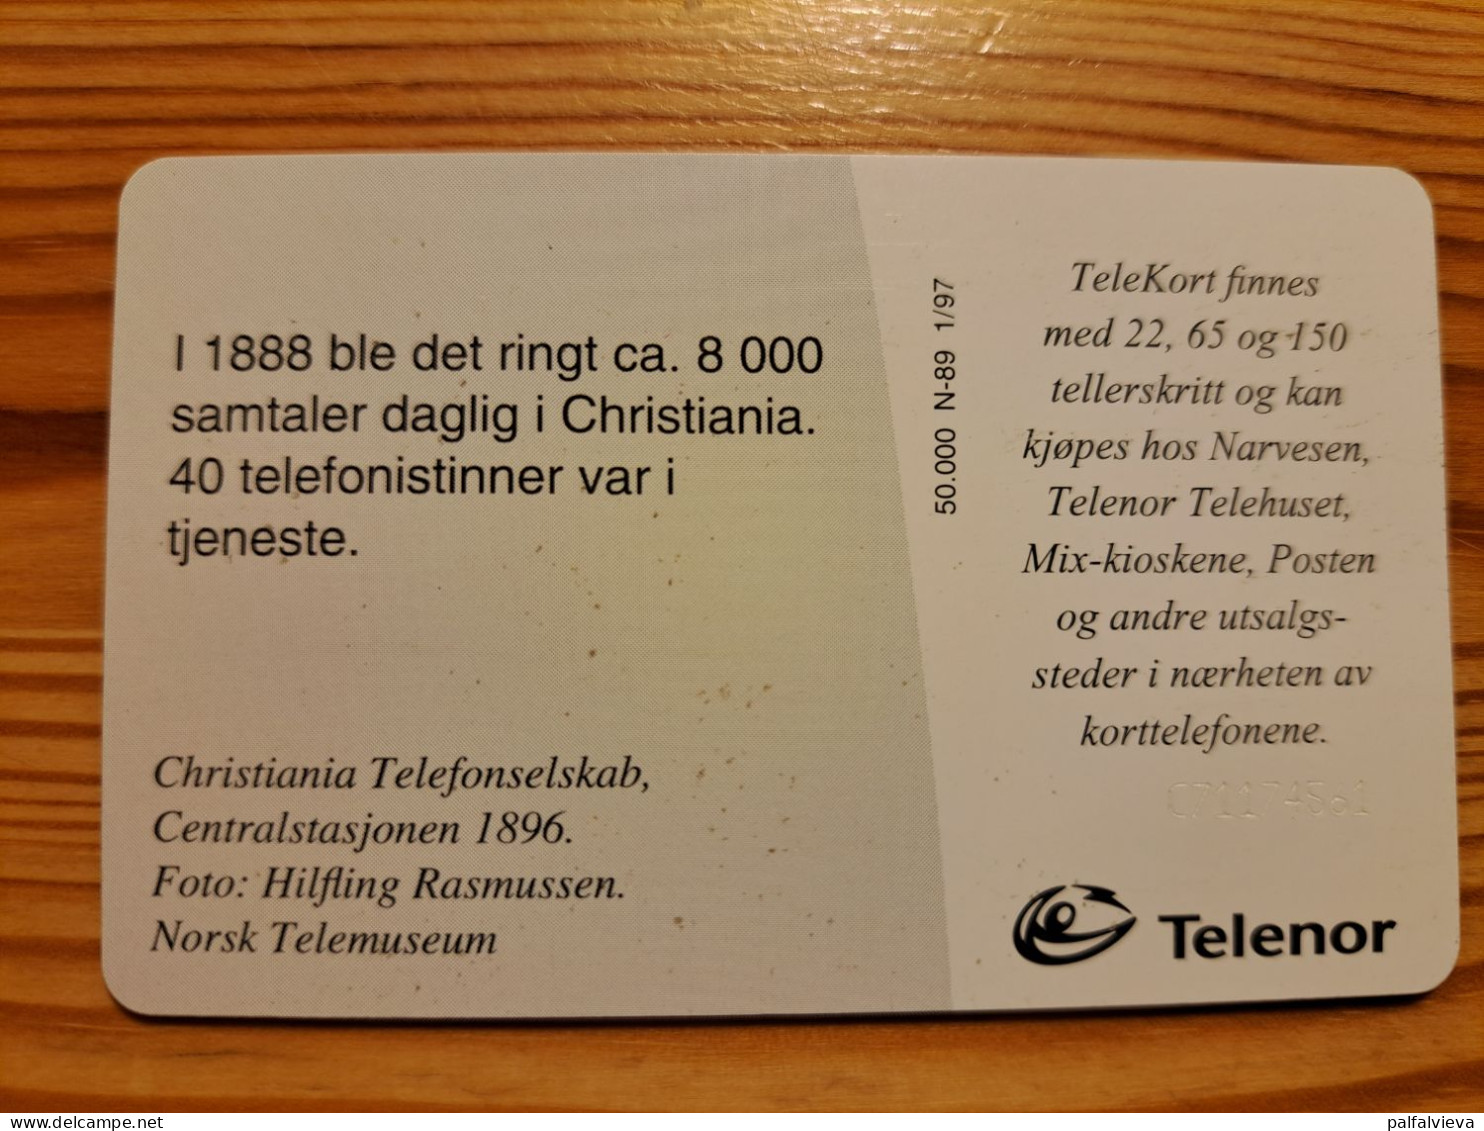 Phonecard Norway, N-89 - Historic Photo, Telephone - Norwegen